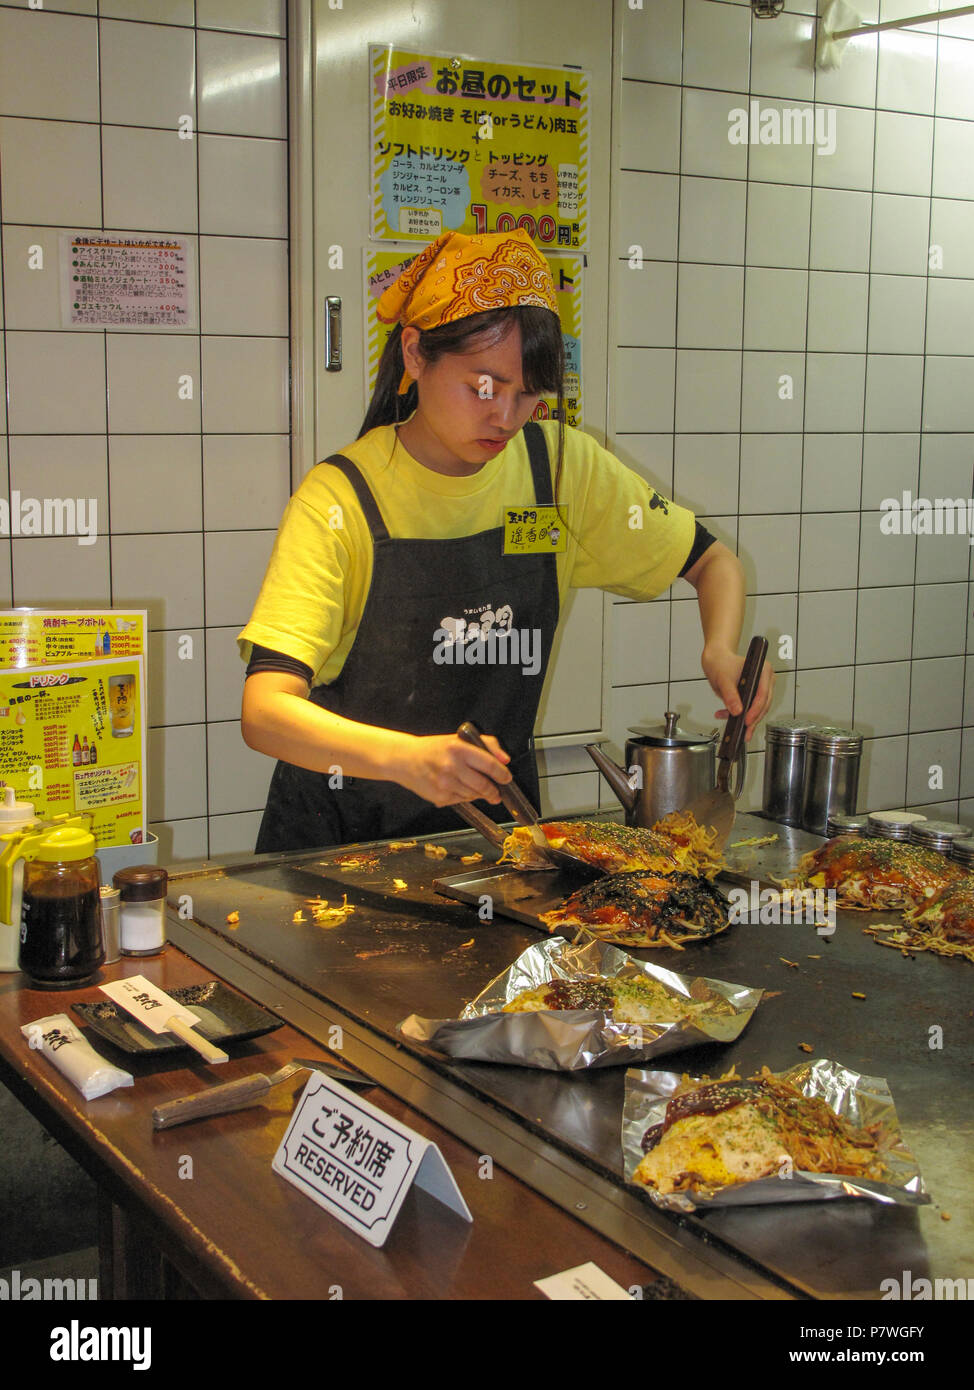 Restaurant kitchen, staff cooking Okonomiyaki savoury pancakes Stock Photo